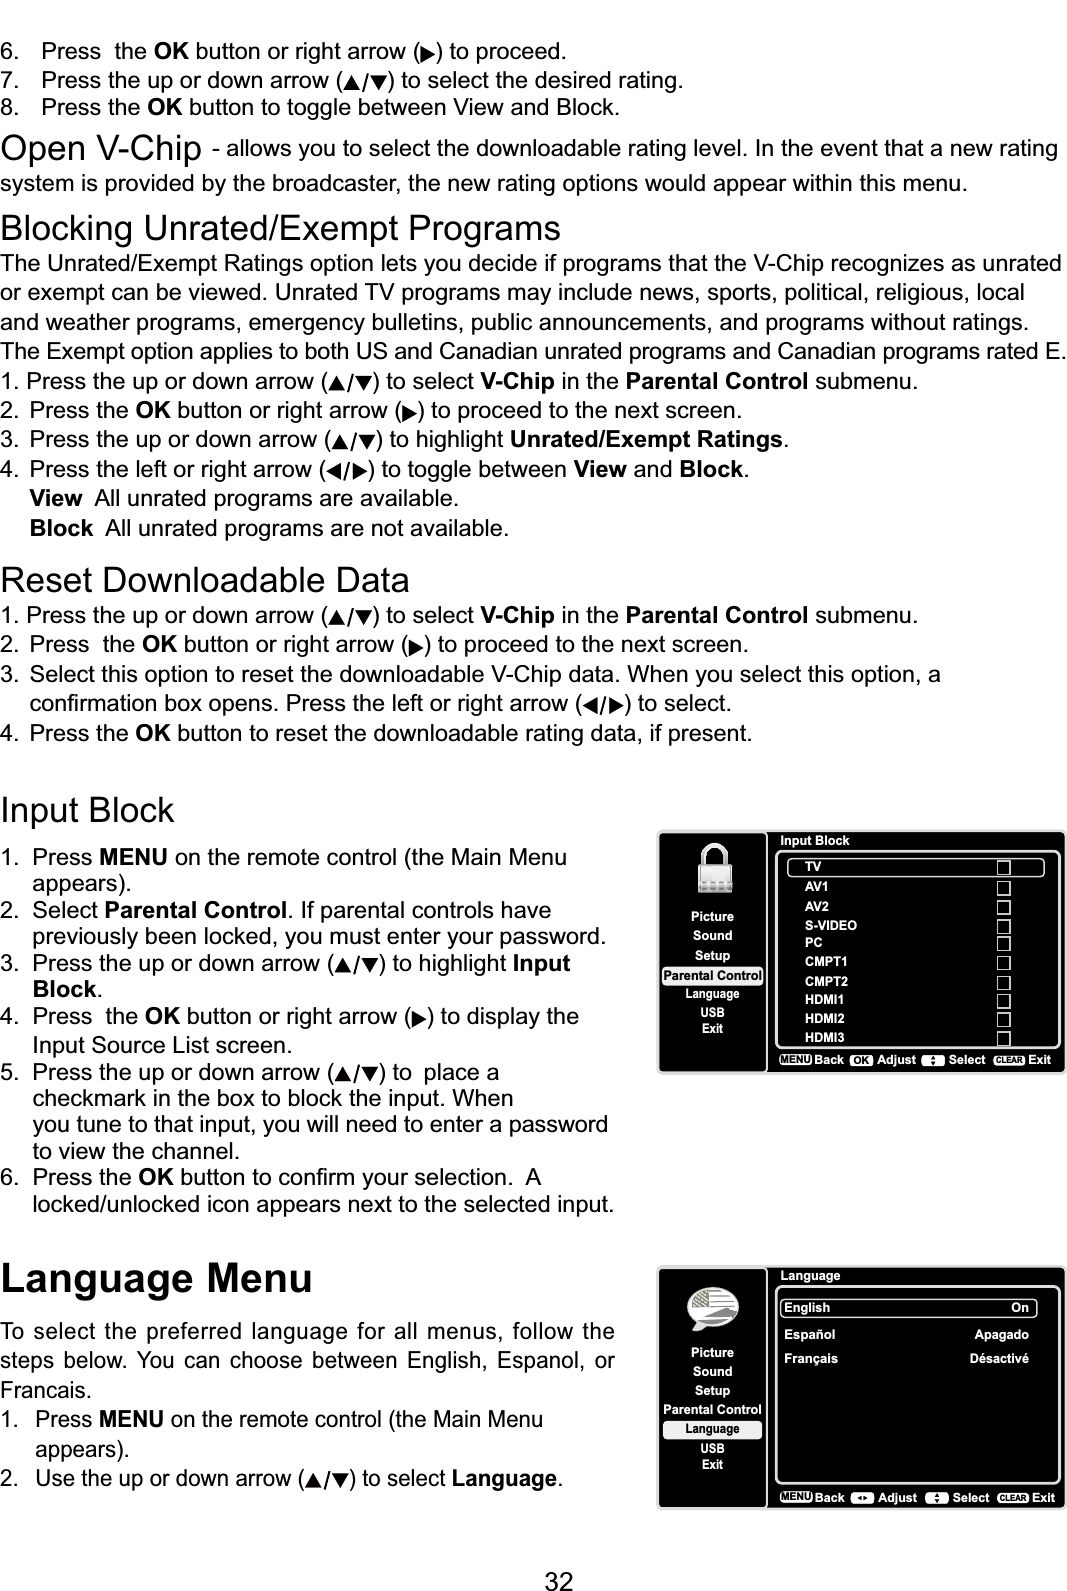 32Language MenuTo select the preferred language for all menus, follow the steps below. You can choose between English, Espanol, or Francais.1. Press MENU on the remote control (the Main Menu appears).2. Use the up or down arrow ( ) to select Language.LanguageSetupParental ControlLanguageSoundPictureEnglish OnUSBExitEspañolApagadoFrançaisDésactivéBackMENU Adjust Select ExitCLEAR%ORFNLQJ8QUDWHG([HPSW3URJUDPV7KH8QUDWHG([HPSW5DWLQJVRSWLRQOHWV\RXGHFLGHLISURJUDPVWKDWWKH9&amp;KLSUHFRJQL]HVDVXQUDWHGRUH[HPSWFDQEHYLHZHG8QUDWHG79SURJUDPVPD\LQFOXGHQHZVVSRUWVSROLWLFDOUHOLJLRXVORFDOand weather programs, emergency bulletins, public announcements, and programs without ratings. The Exempt option applies to both US and Canadian unrated programs and Canadian programs rated E.1. Press the up or down arrow ( ) to select V-Chip in the Parental Control submenu.2. Press the OK button or right arrow ( ) to proceed to the next screen.3. Press the up or down arrow ( ) to highlight Unrated/Exempt Ratings.4. Press the left or right arrow ( ) to toggle between View and Block.View  All unrated programs are available.Block  All unrated programs are not available.5HVHW&apos;RZQORDGDEOH&apos;DWD1. Press the up or down arrow ( ) to select V-Chip in the Parental Control submenu.2. Press  the OK button or right arrow ( ) to proceed to the next screen. 6HOHFWWKLVRSWLRQWRUHVHWWKHGRZQORDGDEOH9&amp;KLSGDWD:KHQ\RXVHOHFWWKLVRSWLRQD  FRQ¿UPDWLRQER[RSHQV3UHVVWKHOHIWRUULJKWDUURZ ) to select.4. Press the OK button to reset the downloadable rating data, if present.,QSXW%ORFN1. Press MENU on the remote control (the Main Menu appears).2. Select Parental Control. If parental controls have  SUHYLRXVO\EHHQORFNHG\RXPXVWHQWHU\RXUSDVVZRUG3. Press the up or down arrow ( ) to highlight Input Block.4. Press  the OK button or right arrow ( ) to display the Input Source List screen.5. Press the up or down arrow ( ) to  place a     FKHFNPDUNLQWKHER[WREORFNWKHLQSXW:KHQyou tune to that input, you will need to enter a password to view the channel.6. Press the OKEXWWRQWRFRQ¿UP\RXUVHOHFWLRQ$ ORFNHGXQORFNHGLFRQDSSHDUVQH[WWRWKHVHOHFWHGLQSXWSetupParental ControlLanguageSoundPictureUSBExitInput BlockPCCMPT1HDMI1HDMI2CMPT2HDMI3TVAV1AV2S-VIDEOBackMENU Adjust Select ExitCLEAROK6. Press  the OK button or right arrow ( ) to proceed.7. Press the up or down arrow ( ) to select the desired rating.8. Press the OK EXWWRQWRWRJJOHEHWZHHQ9LHZDQG%ORFN2SHQ9&amp;KLS- allows you to select the downloadable rating level. In the event that a new rating system is provided by the broadcaster, the new rating options would appear within this menu.